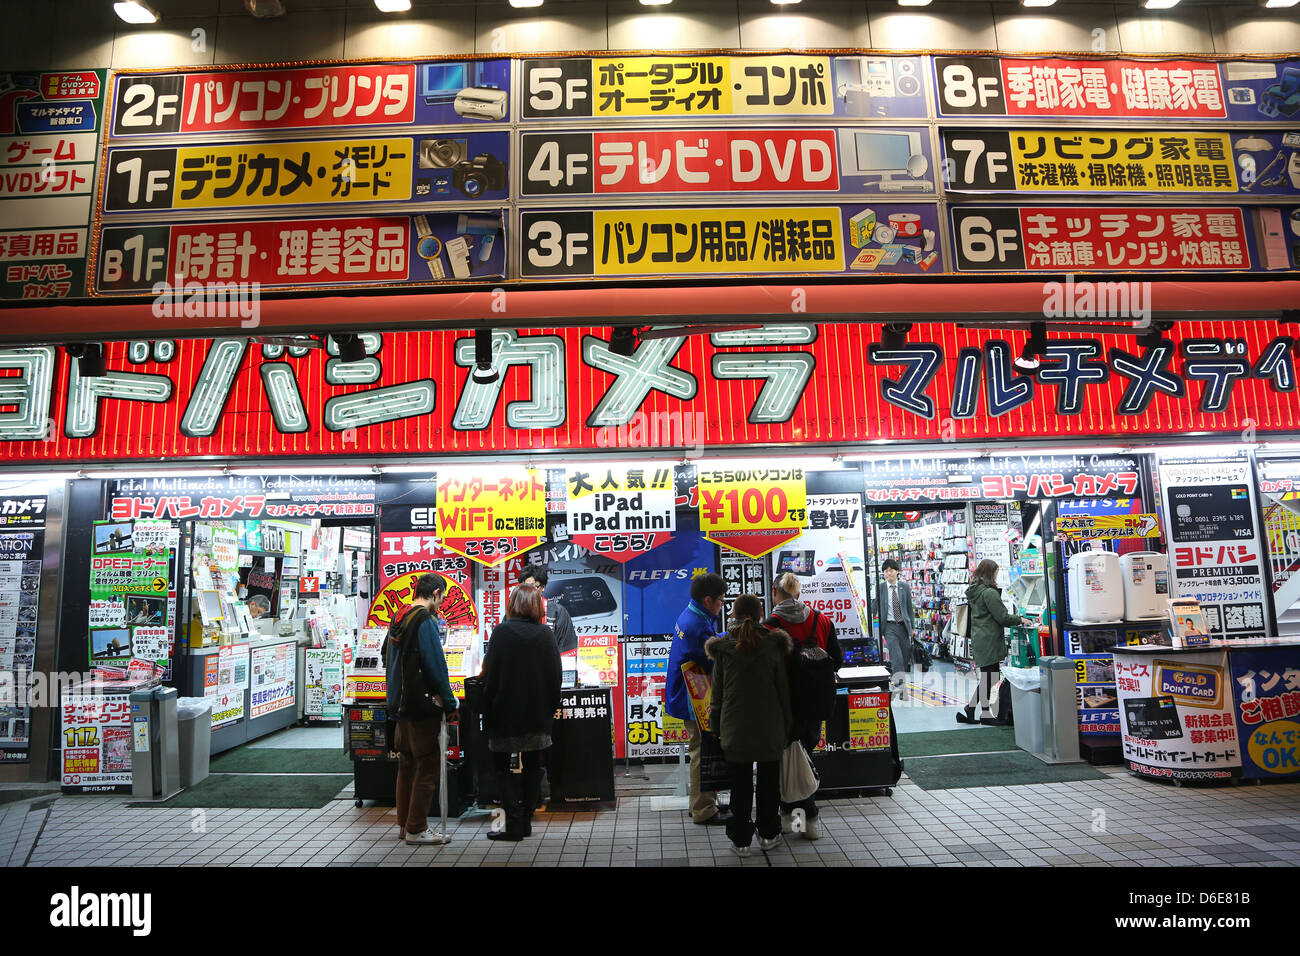 Night street scene of electronics and white good shop in Shinjuku, Tokyo, Japan Stock Photo